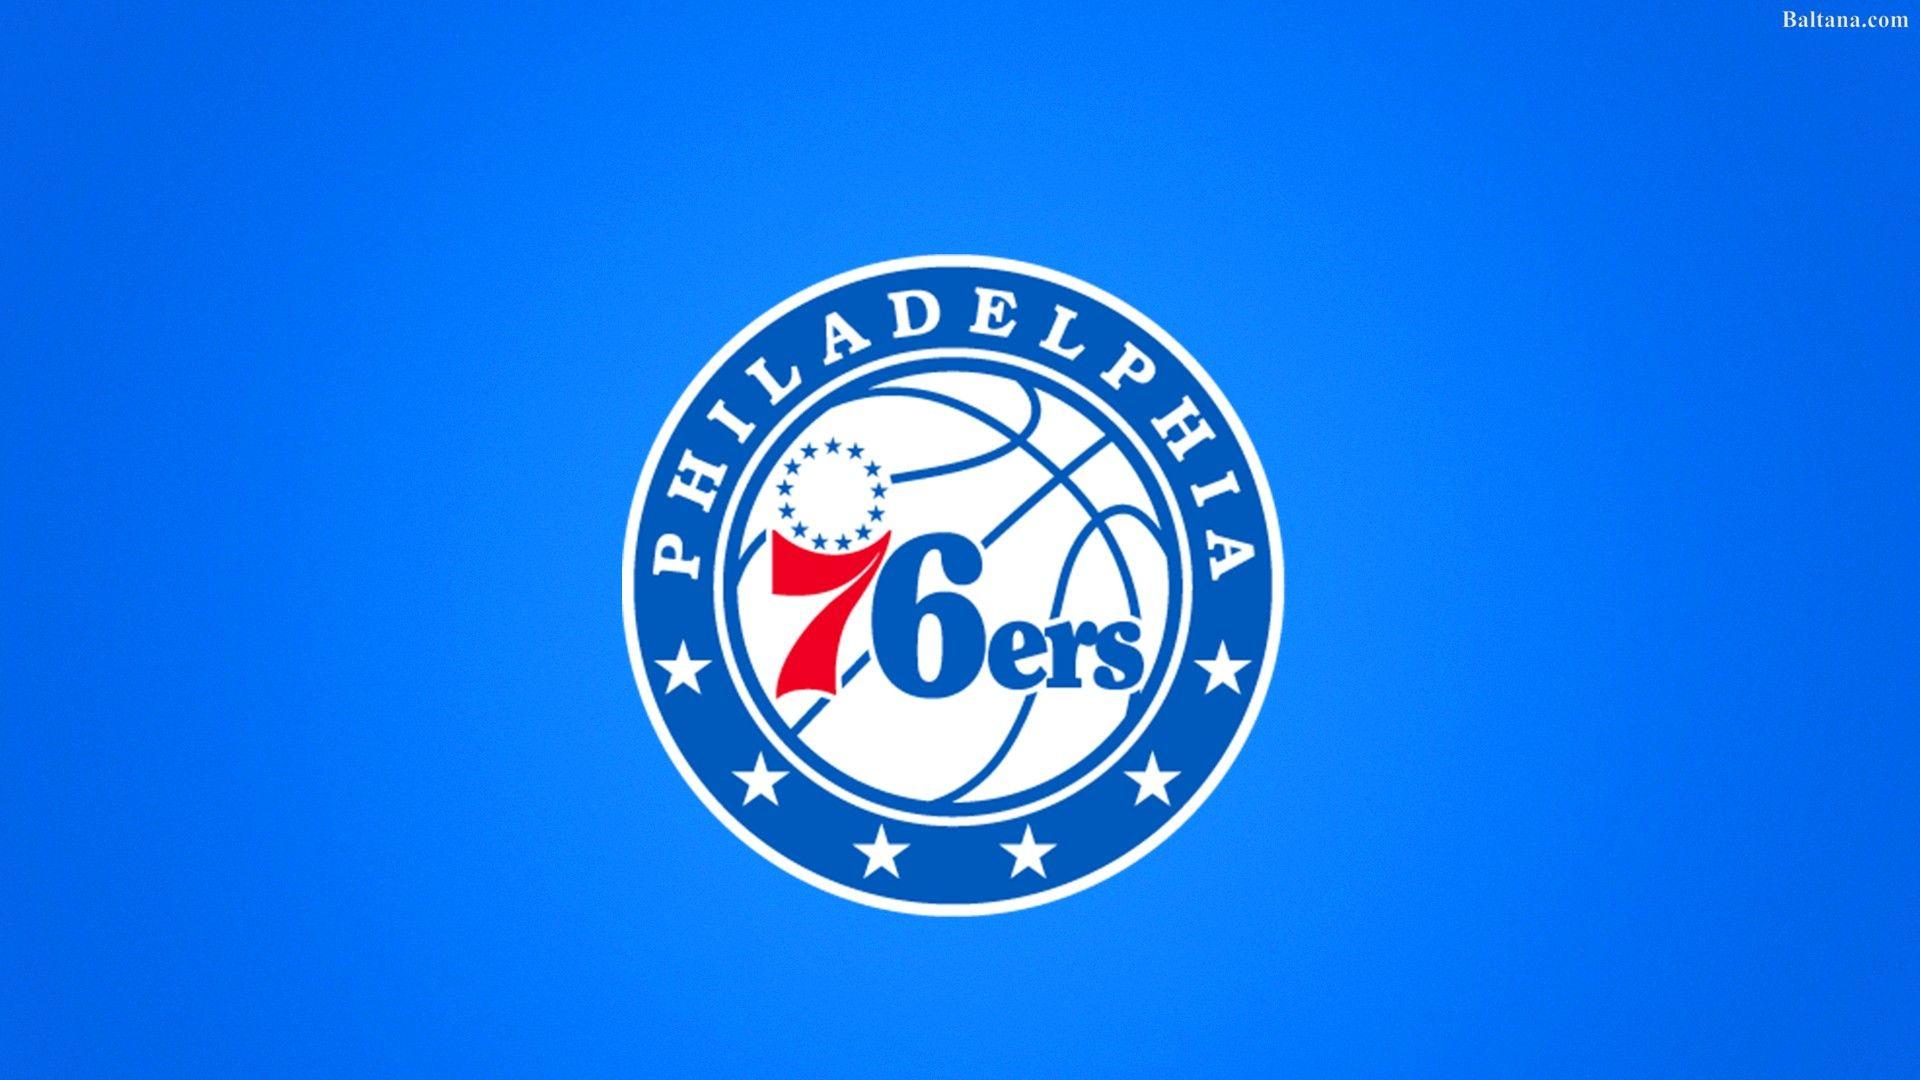 Philadelphia 76ers Logo 2019